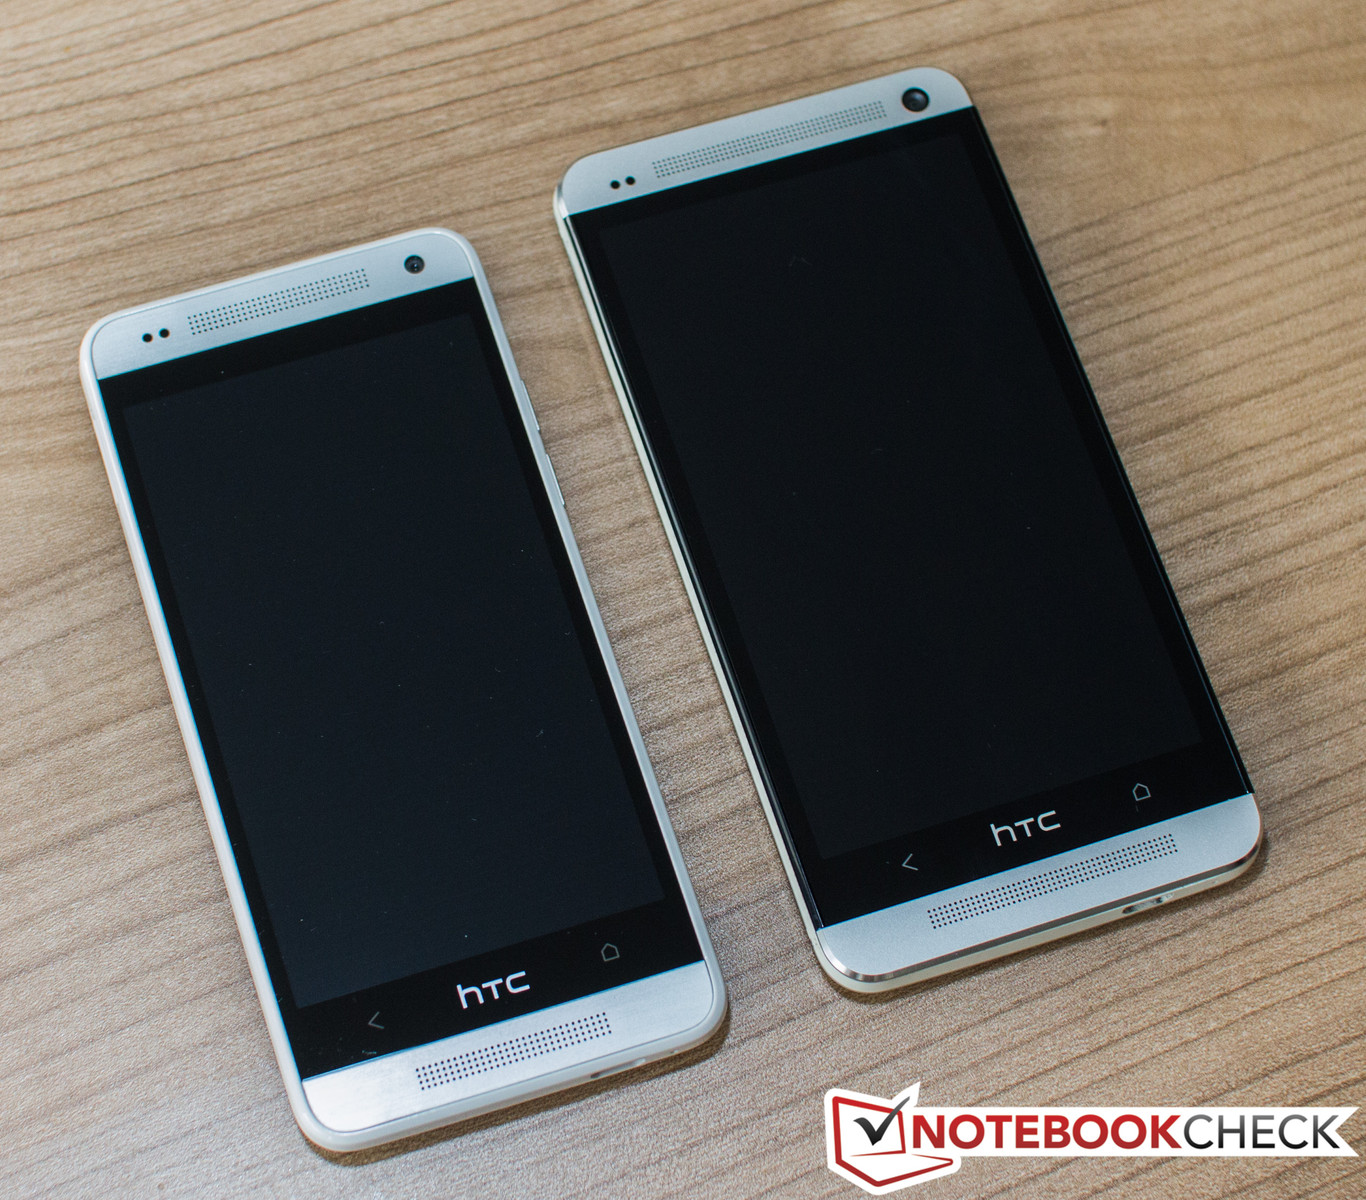 regeling vriendschap omroeper Review HTC One Mini Smartphone - NotebookCheck.net Reviews